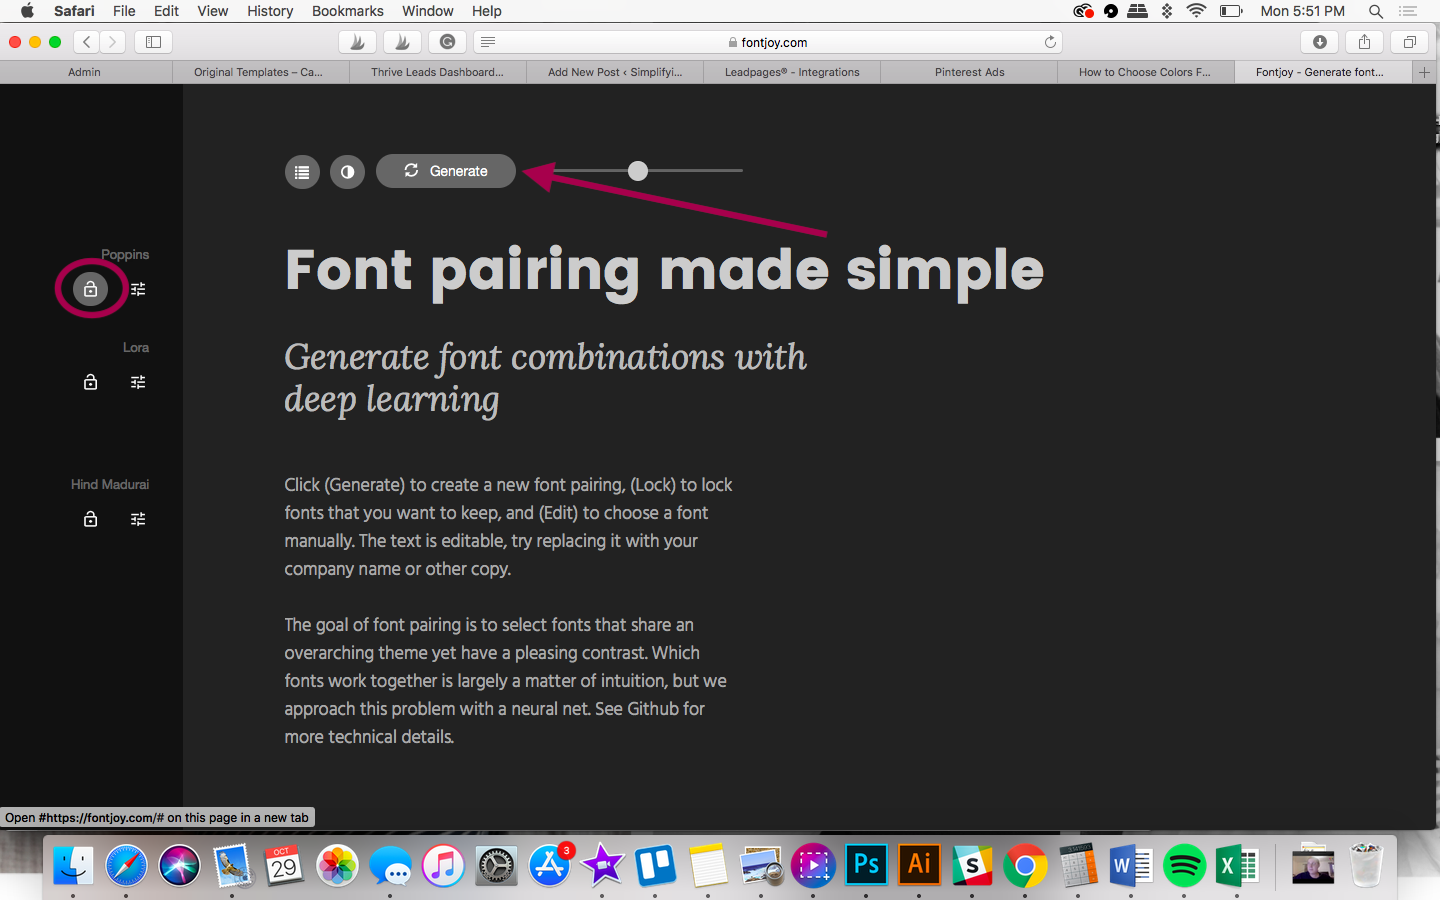 Easy tool for generating font pairings